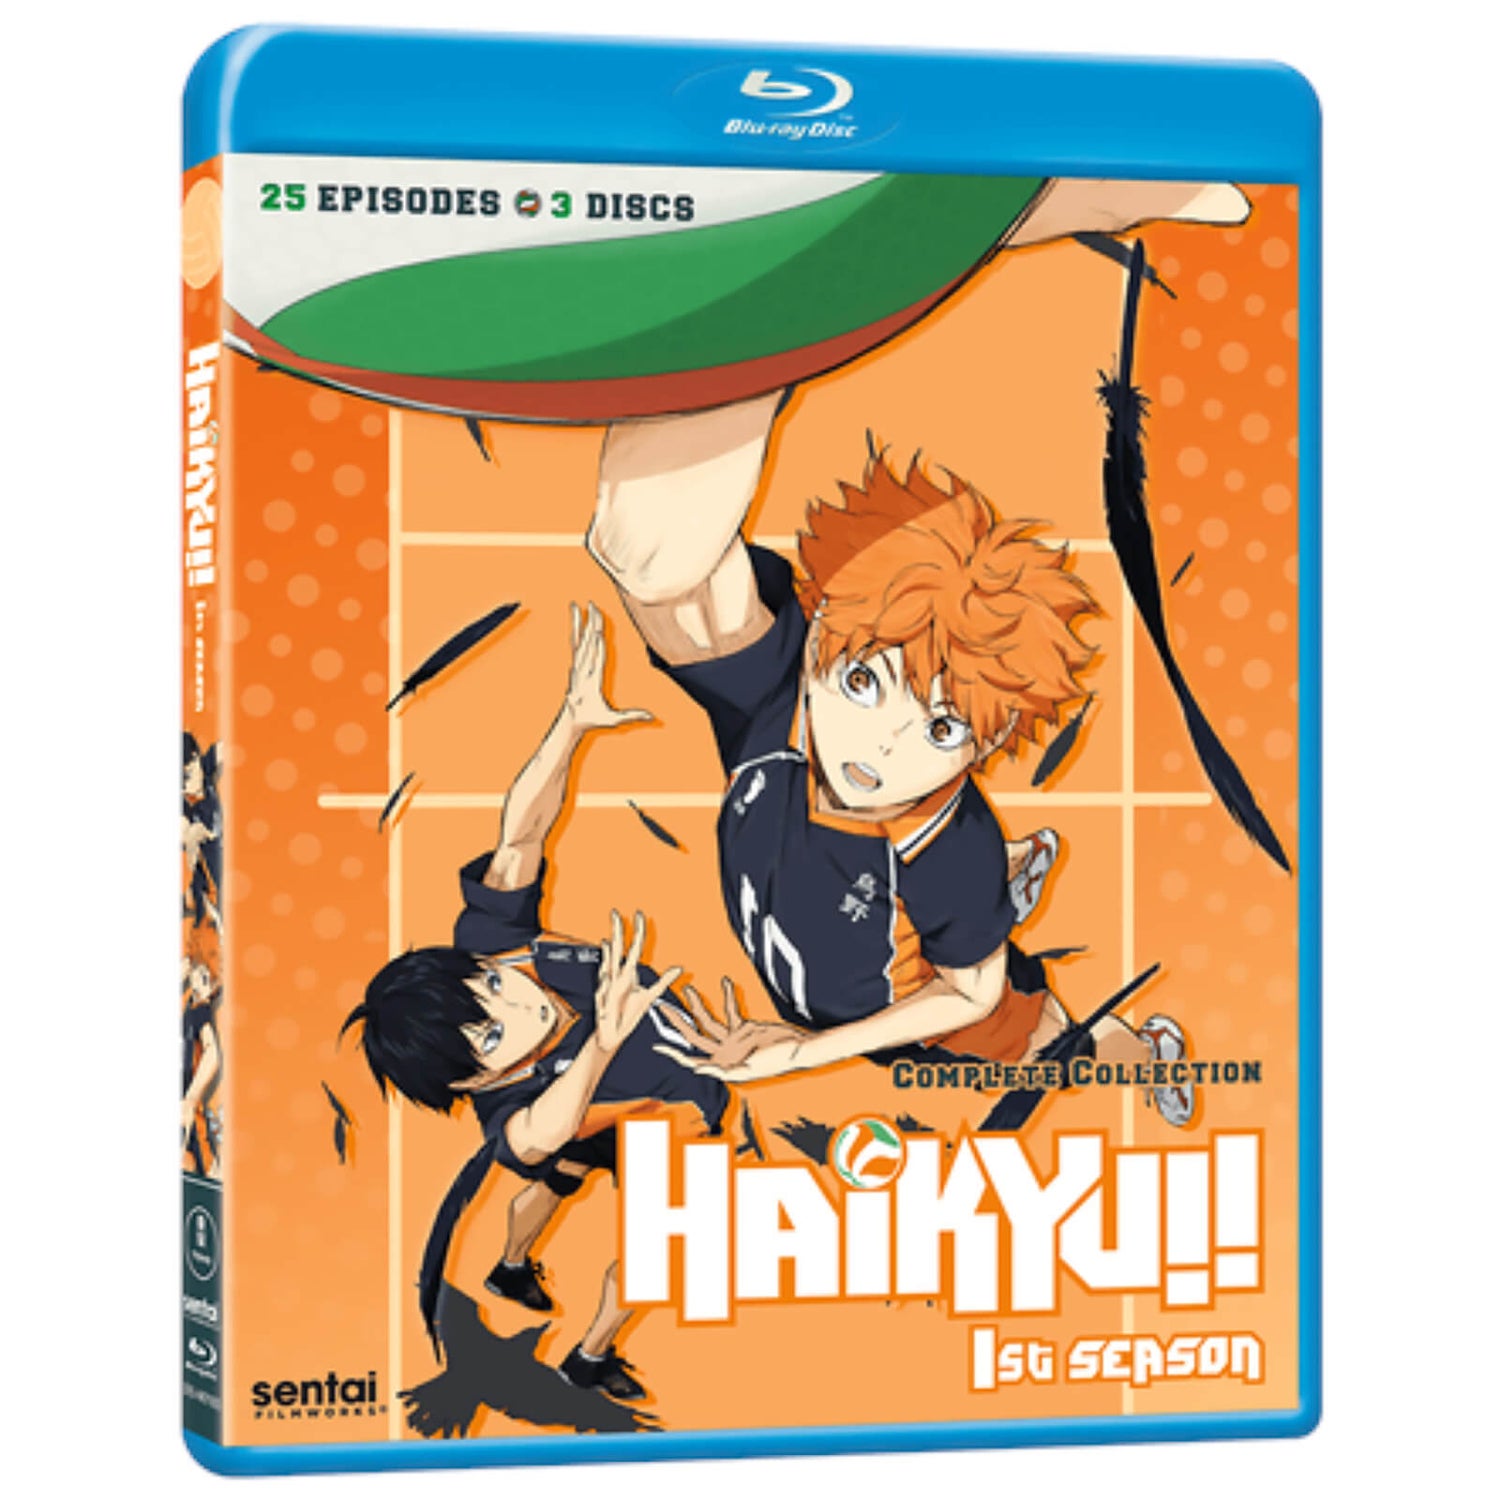 Haikyu!! 1st Season: Complete Collection